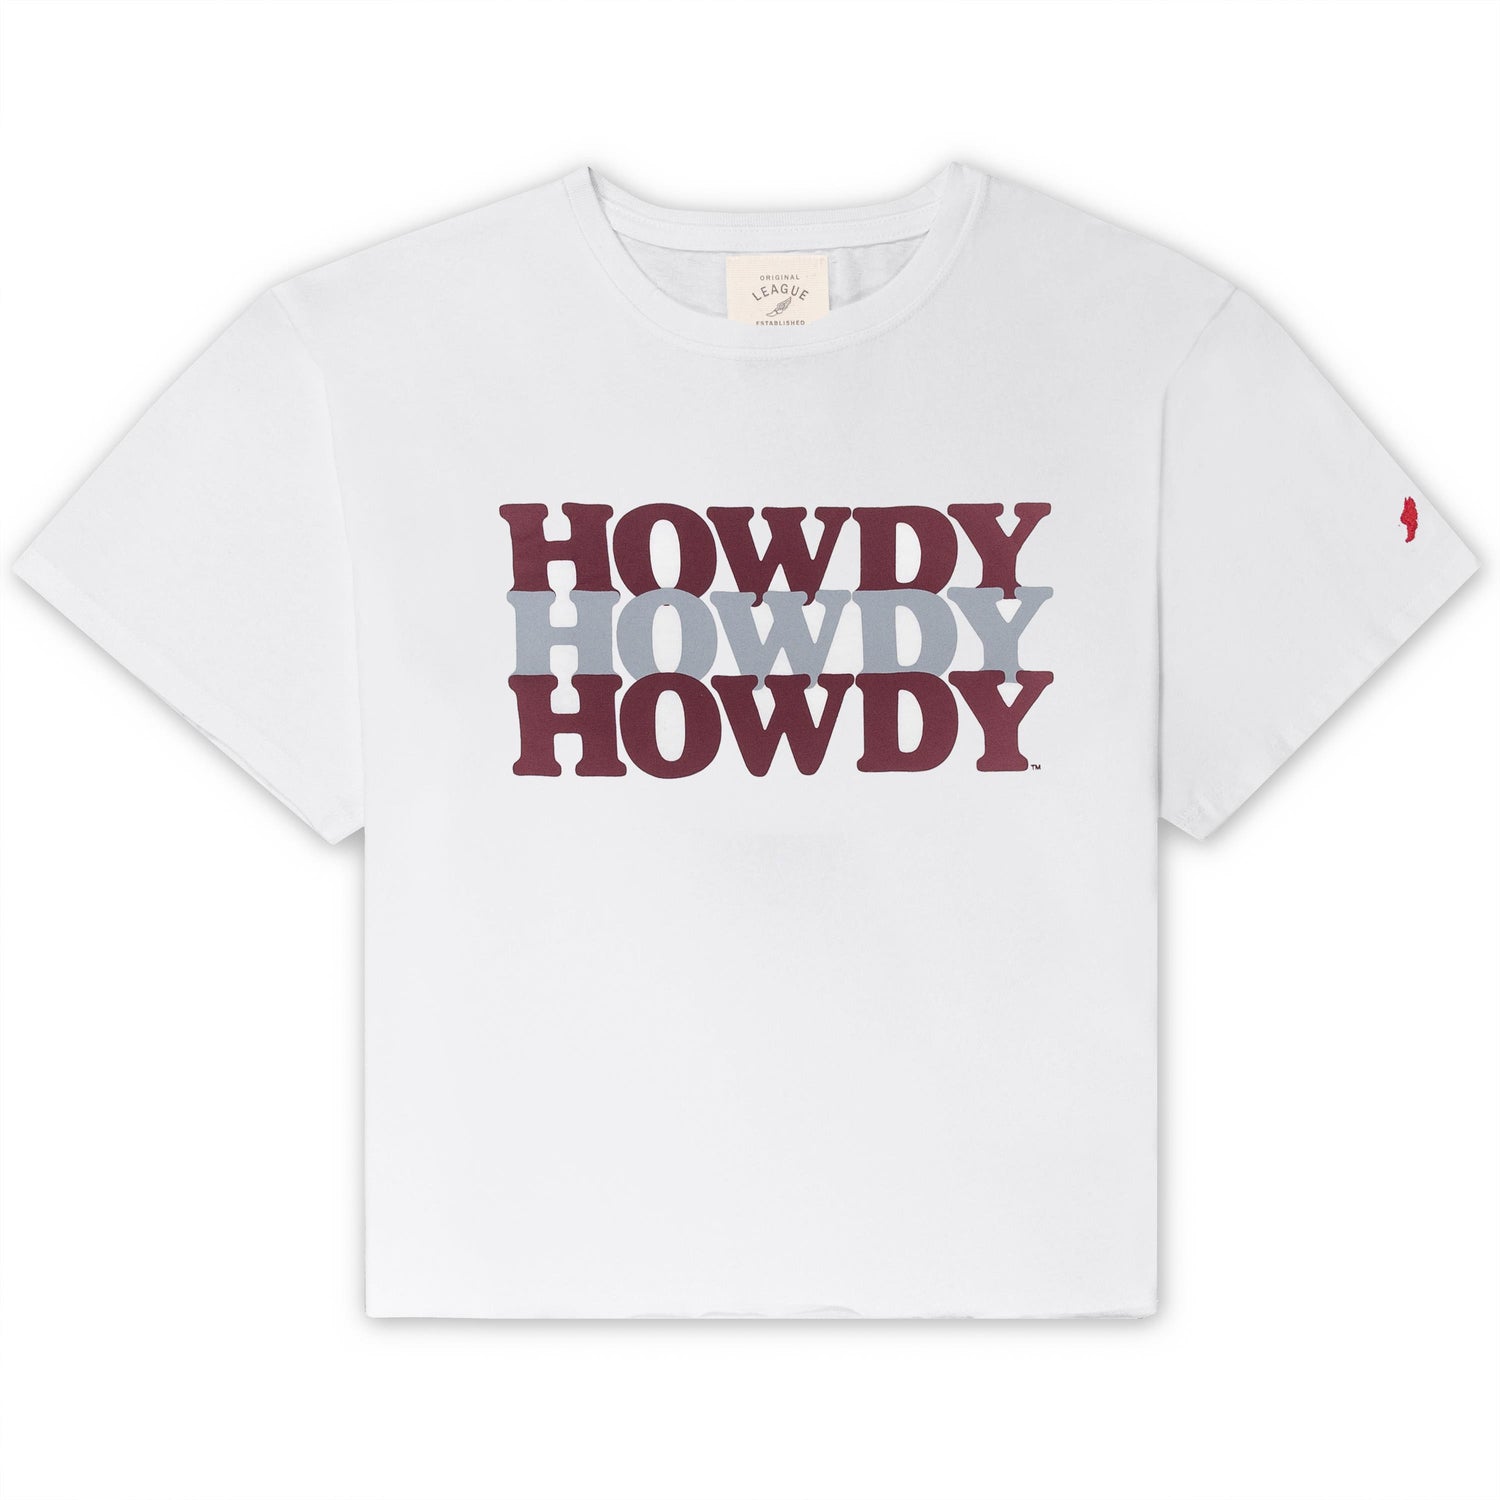 Clothesline Crop Howdy Howdy Howdy